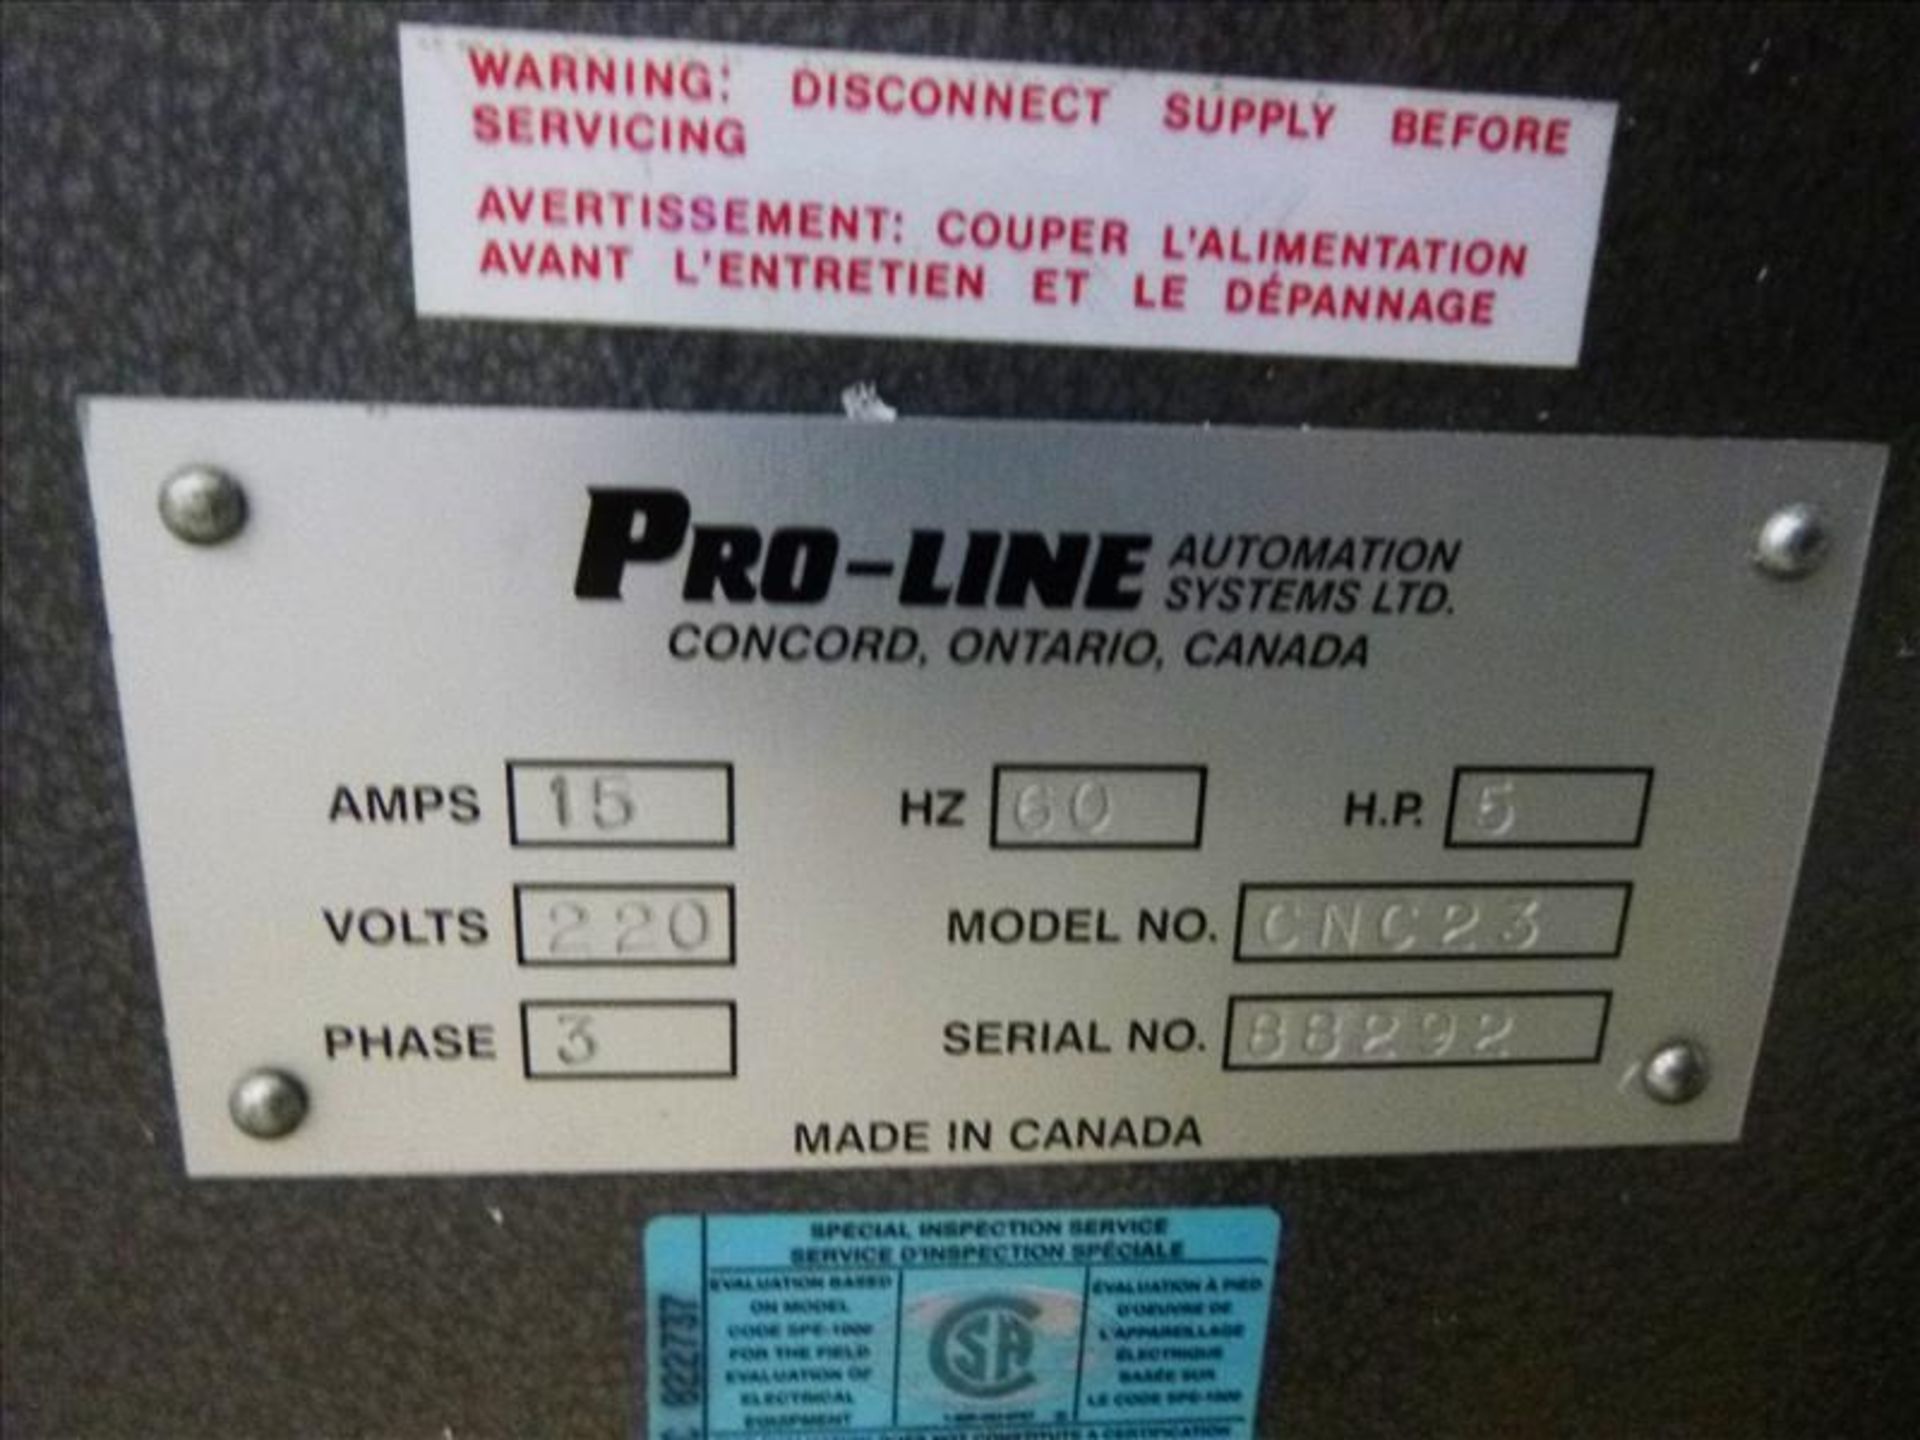 Pro-Line Automation Pro-Clean 2-head corner cleaner, mod. CNC-23, ser. no. 88292 c/w E700 control ( - Image 5 of 6